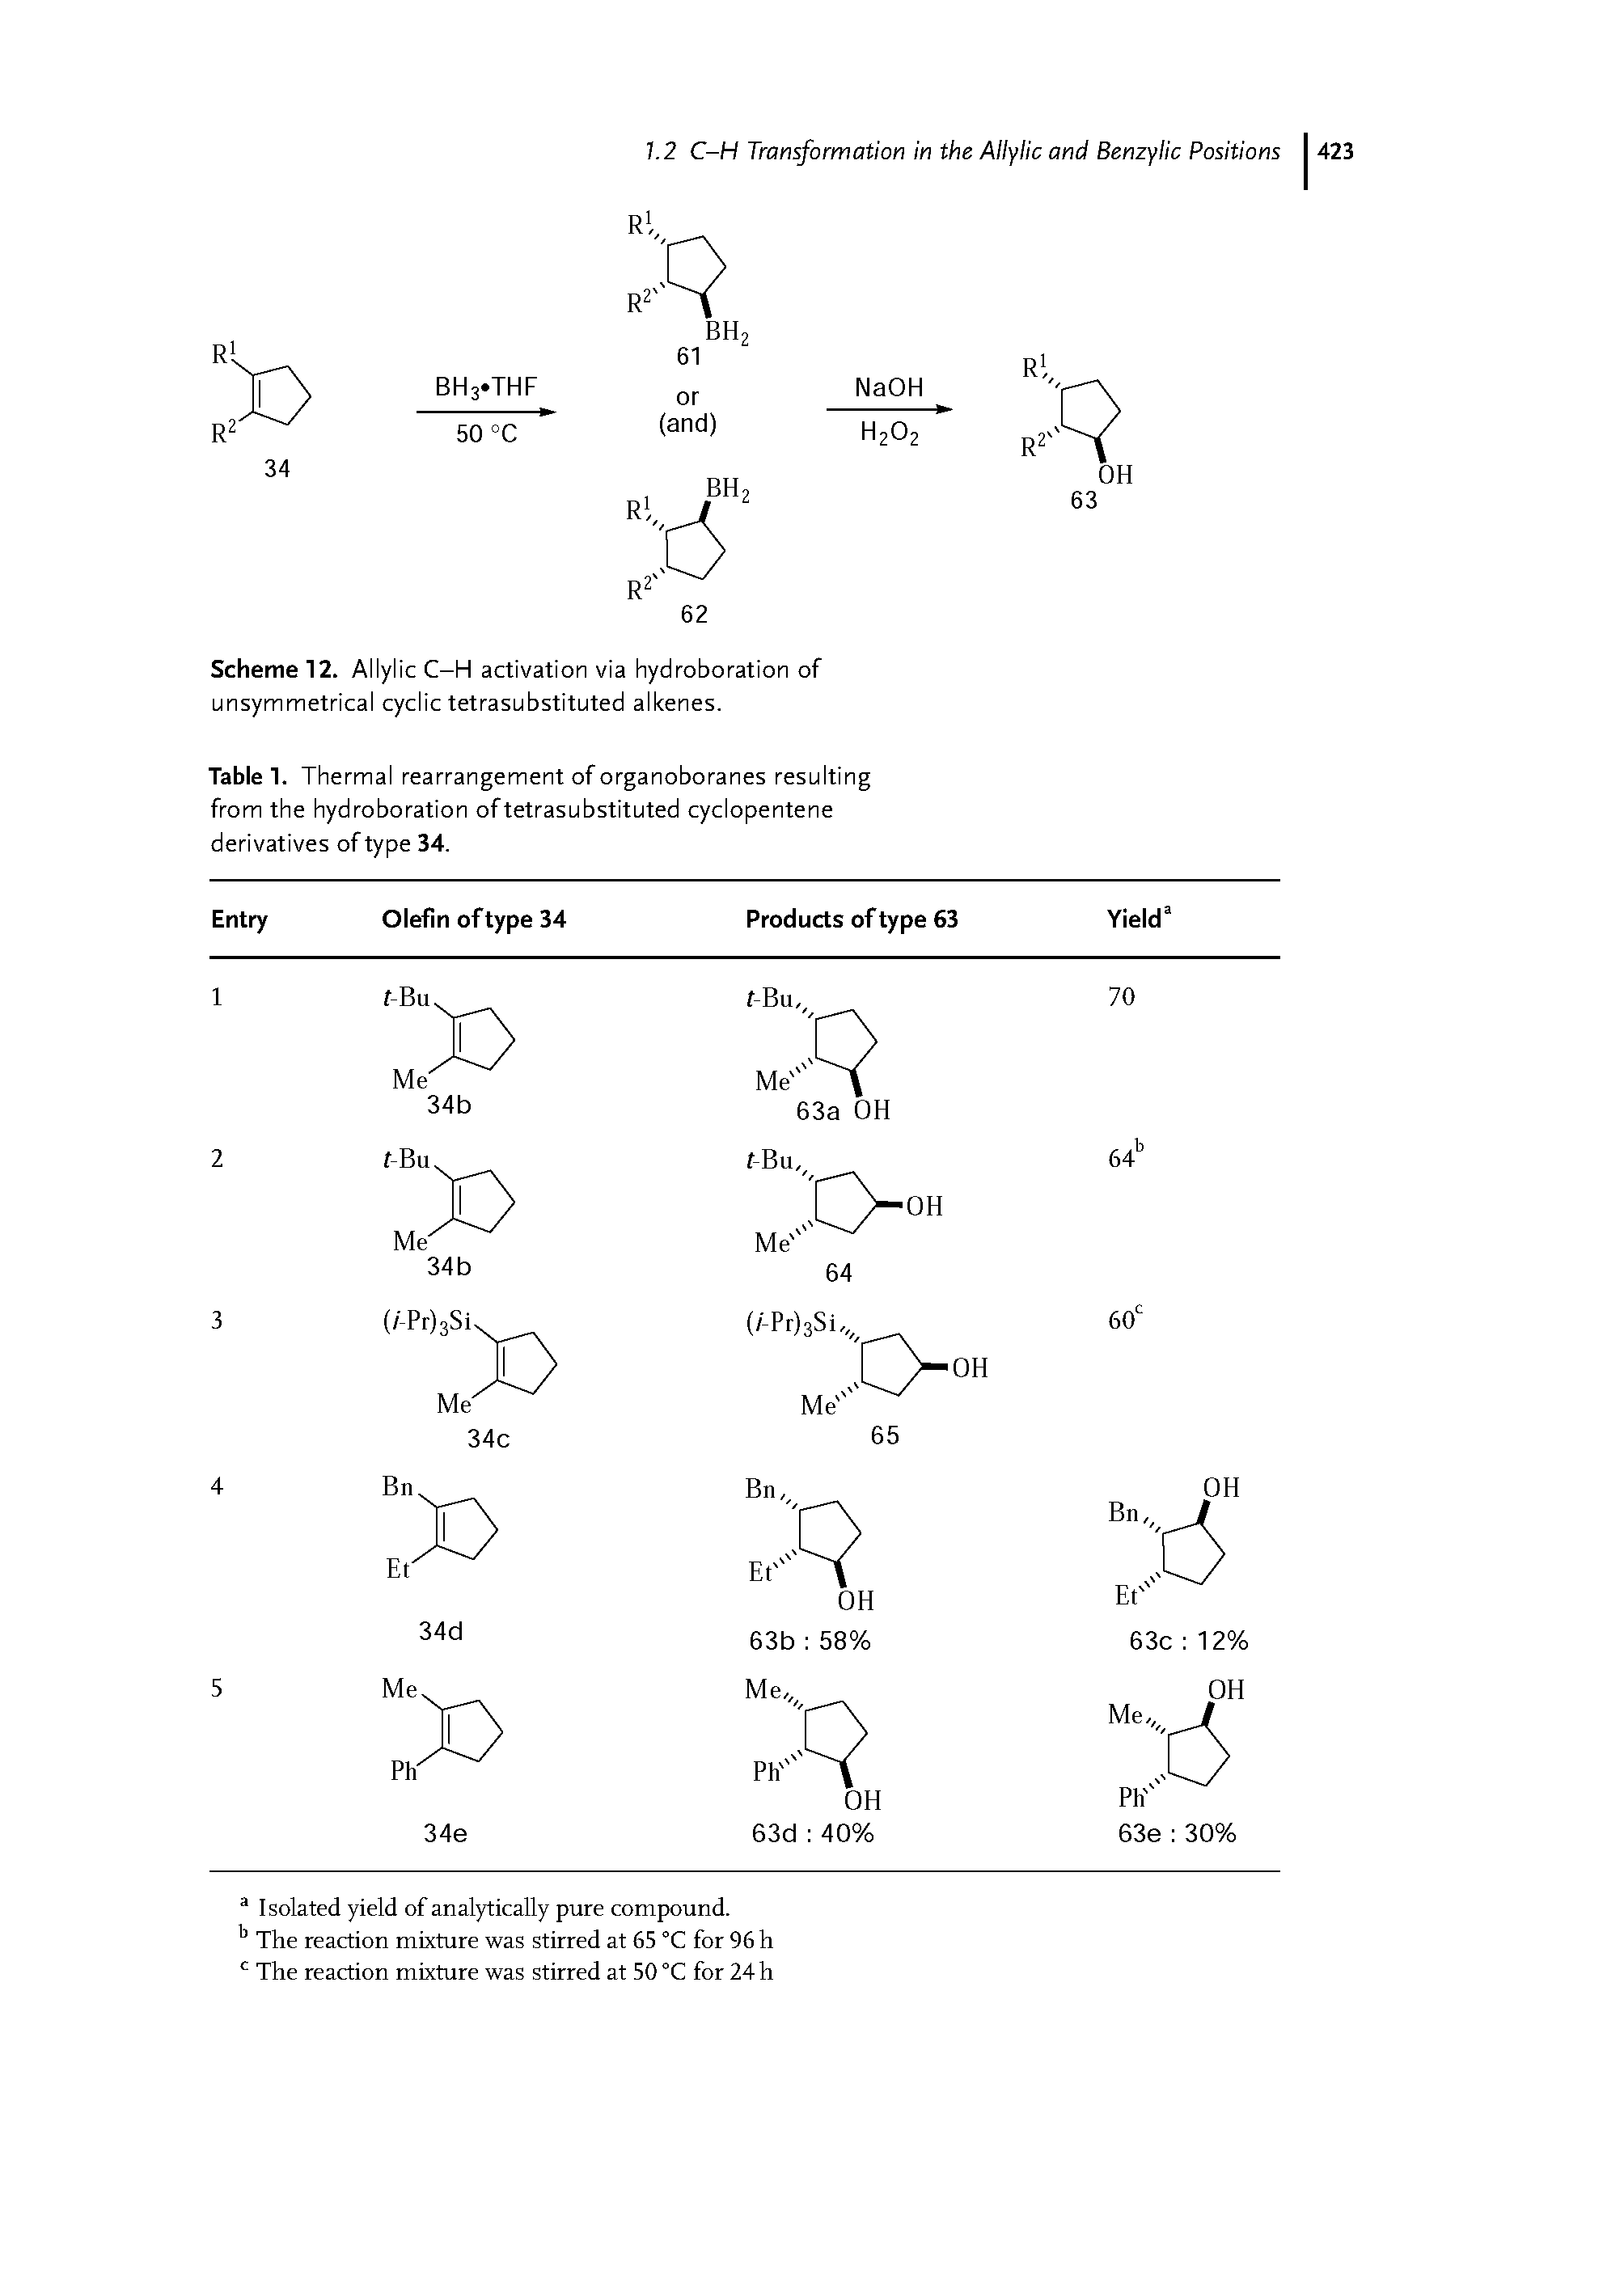 Scheme 12. Allylic C-H activation via hydroboration of unsymmetrical cyclic tetrasubstituted alkenes.